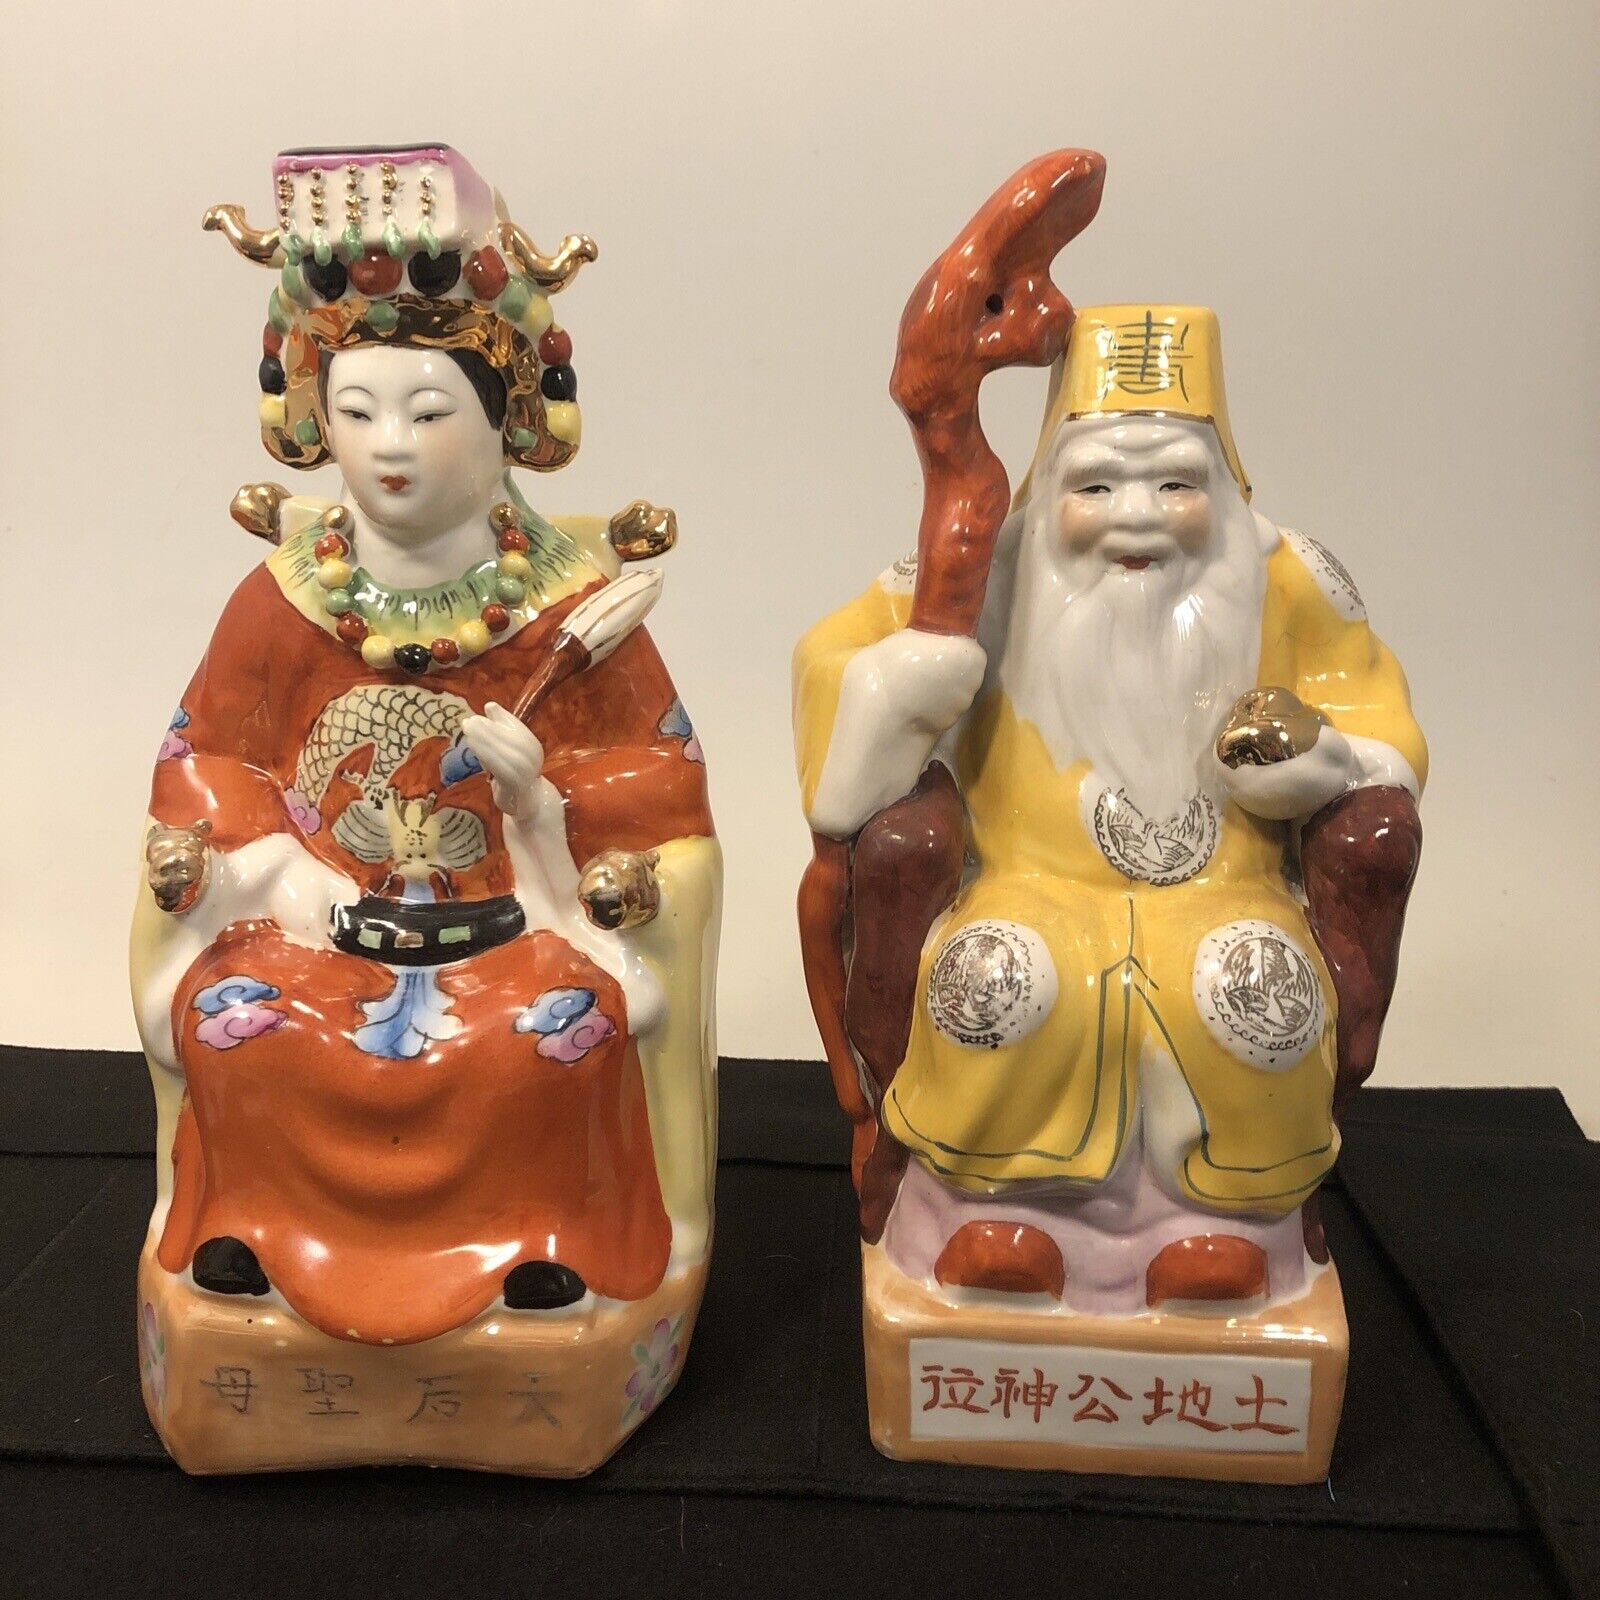 Vintage Antique Chinese Ceramic Figurine empire and empress